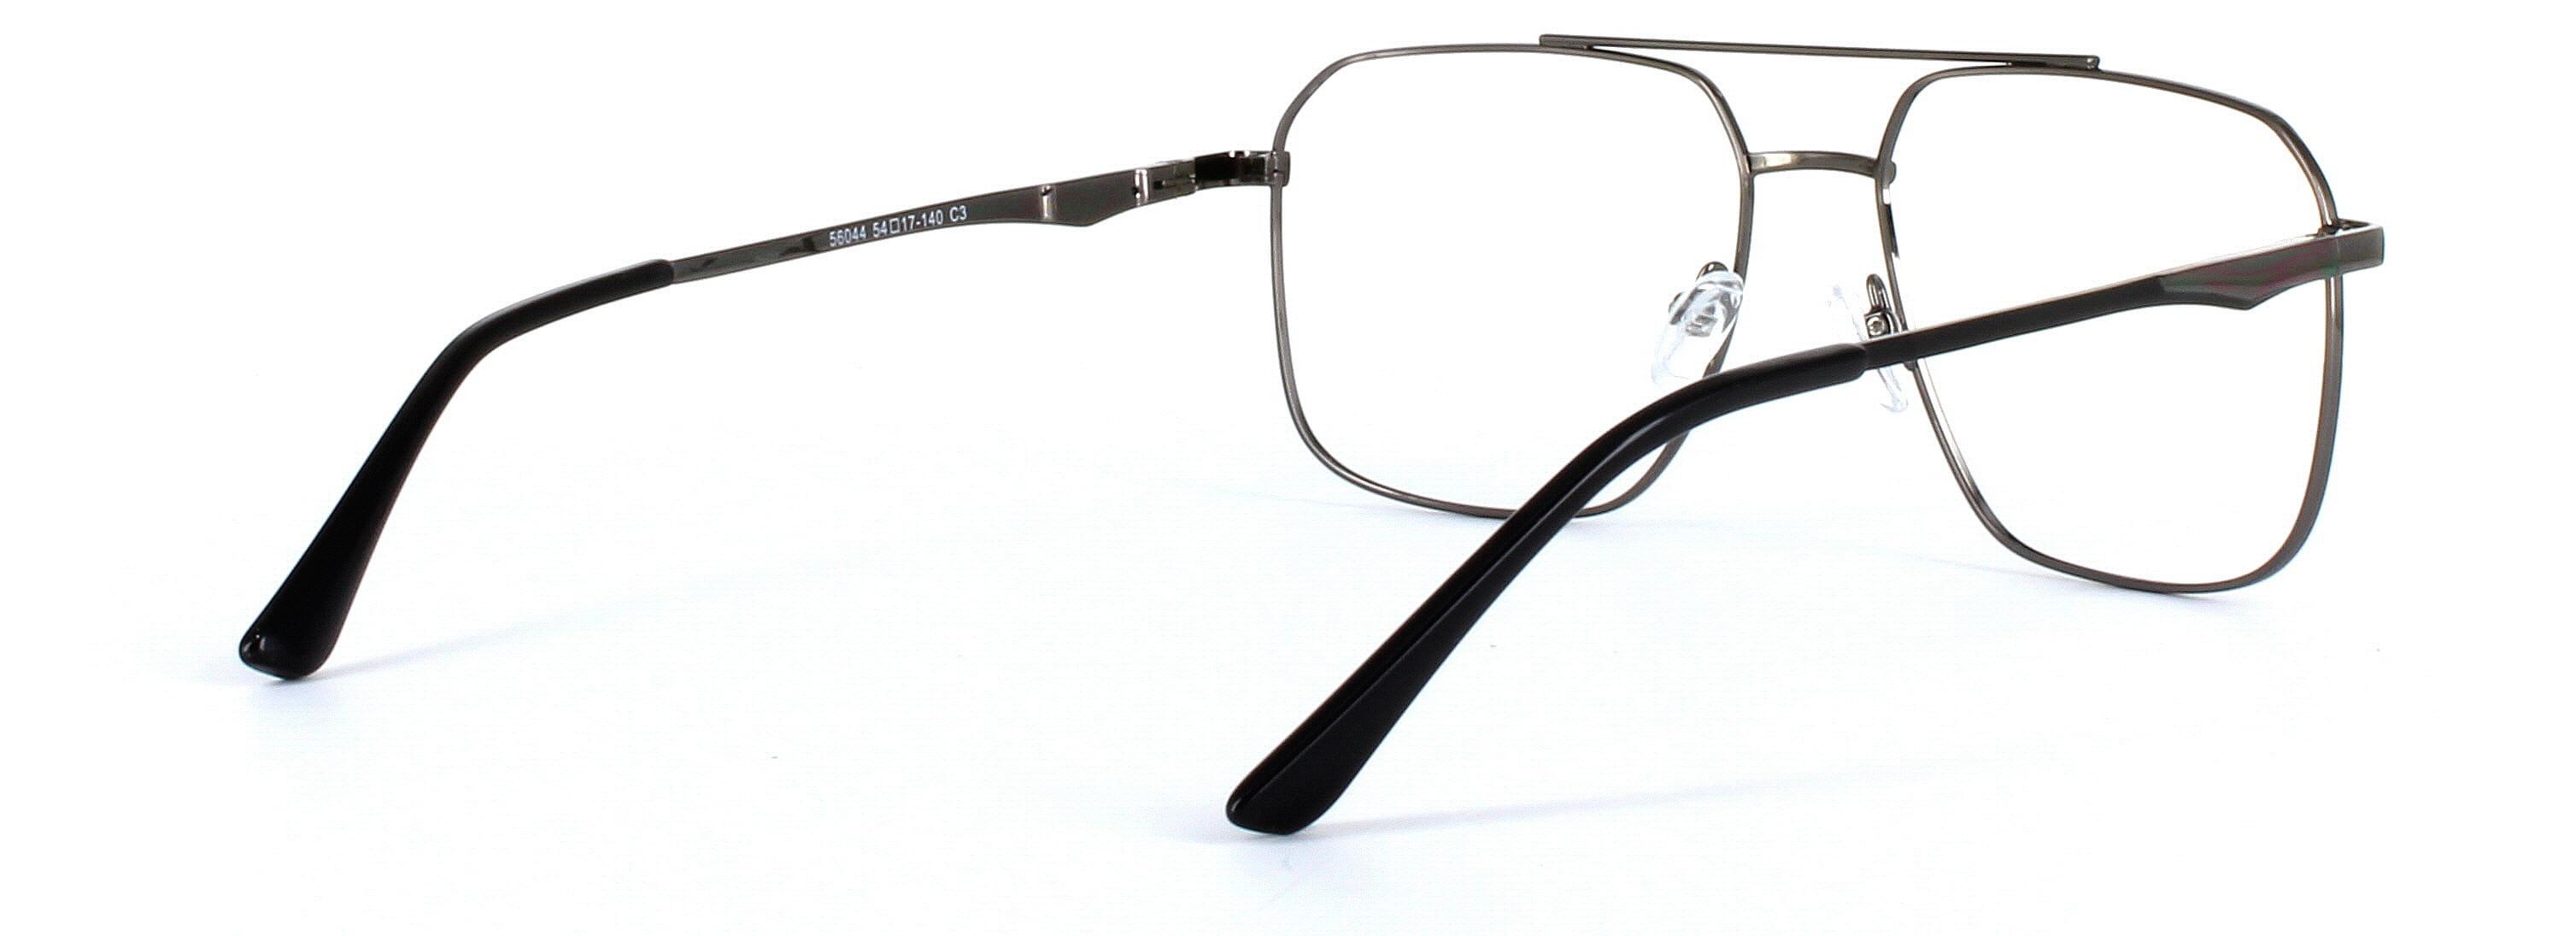 Caludon - Gunmetal aviator gents glasses - image 4